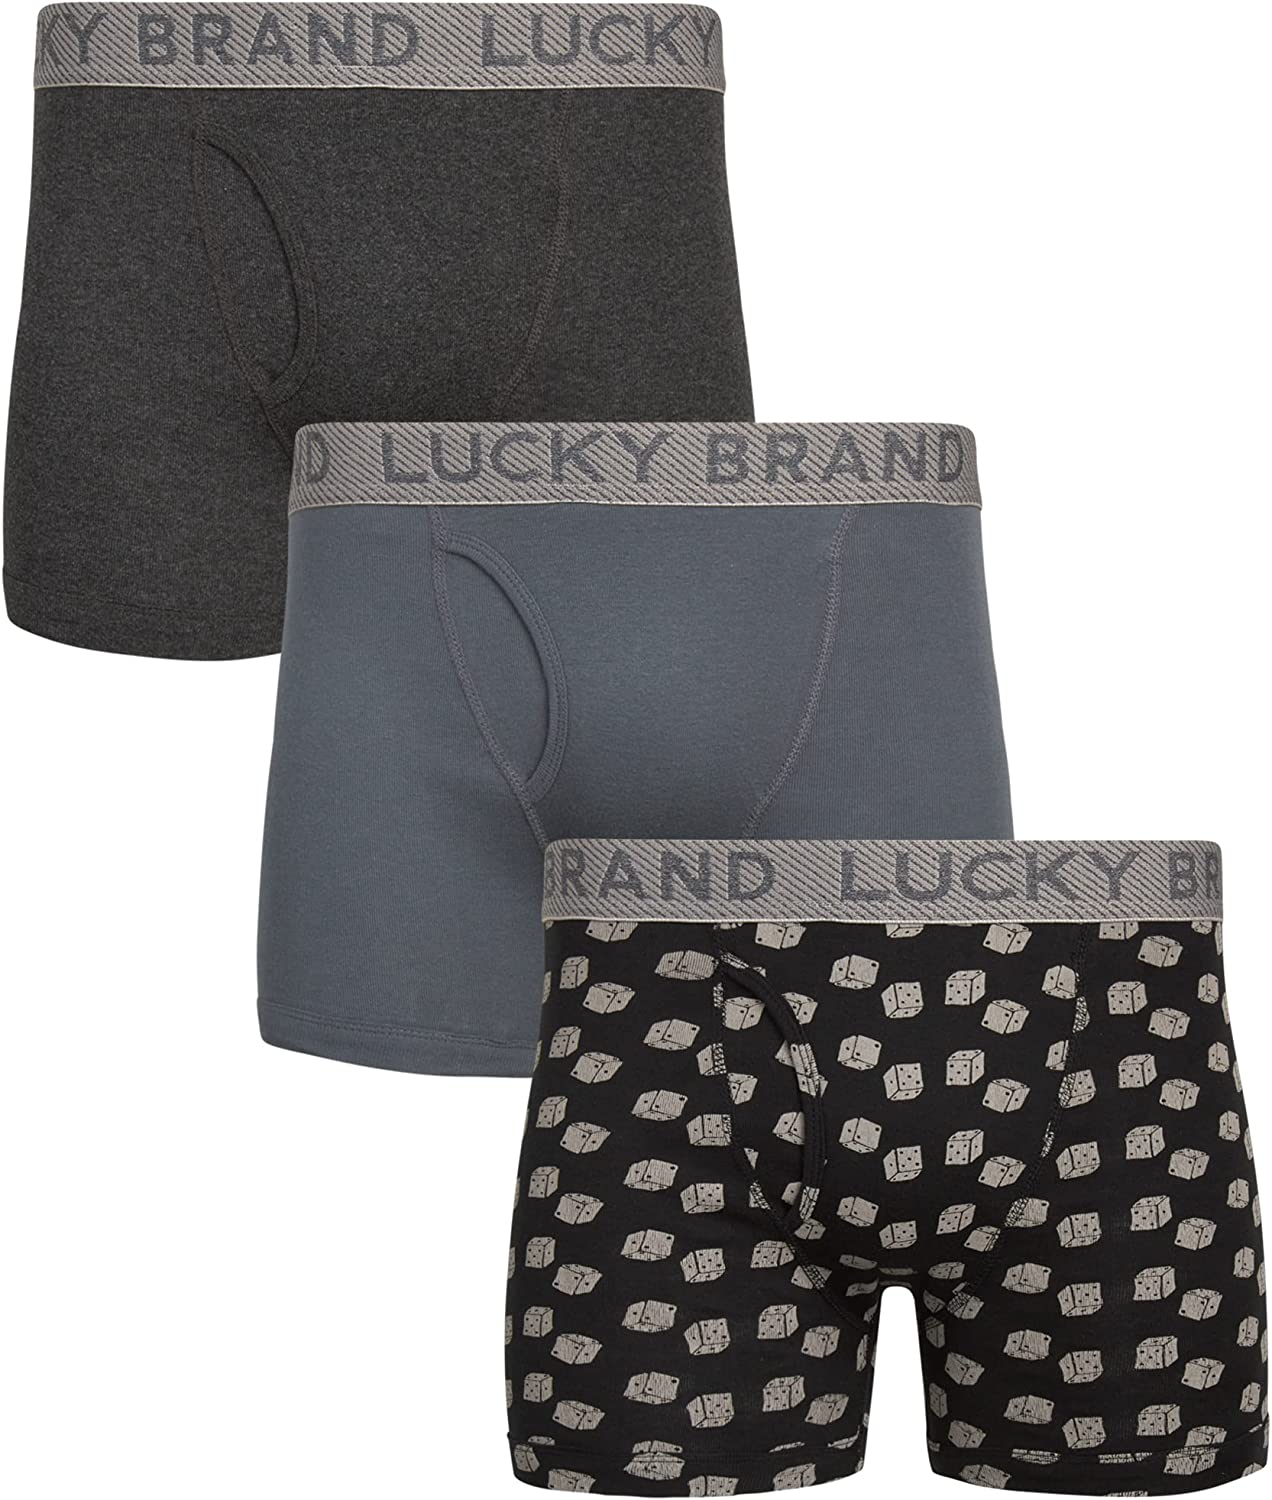 Lucky Brand Men's Cotton Boxer Briefs Underwear with Functional